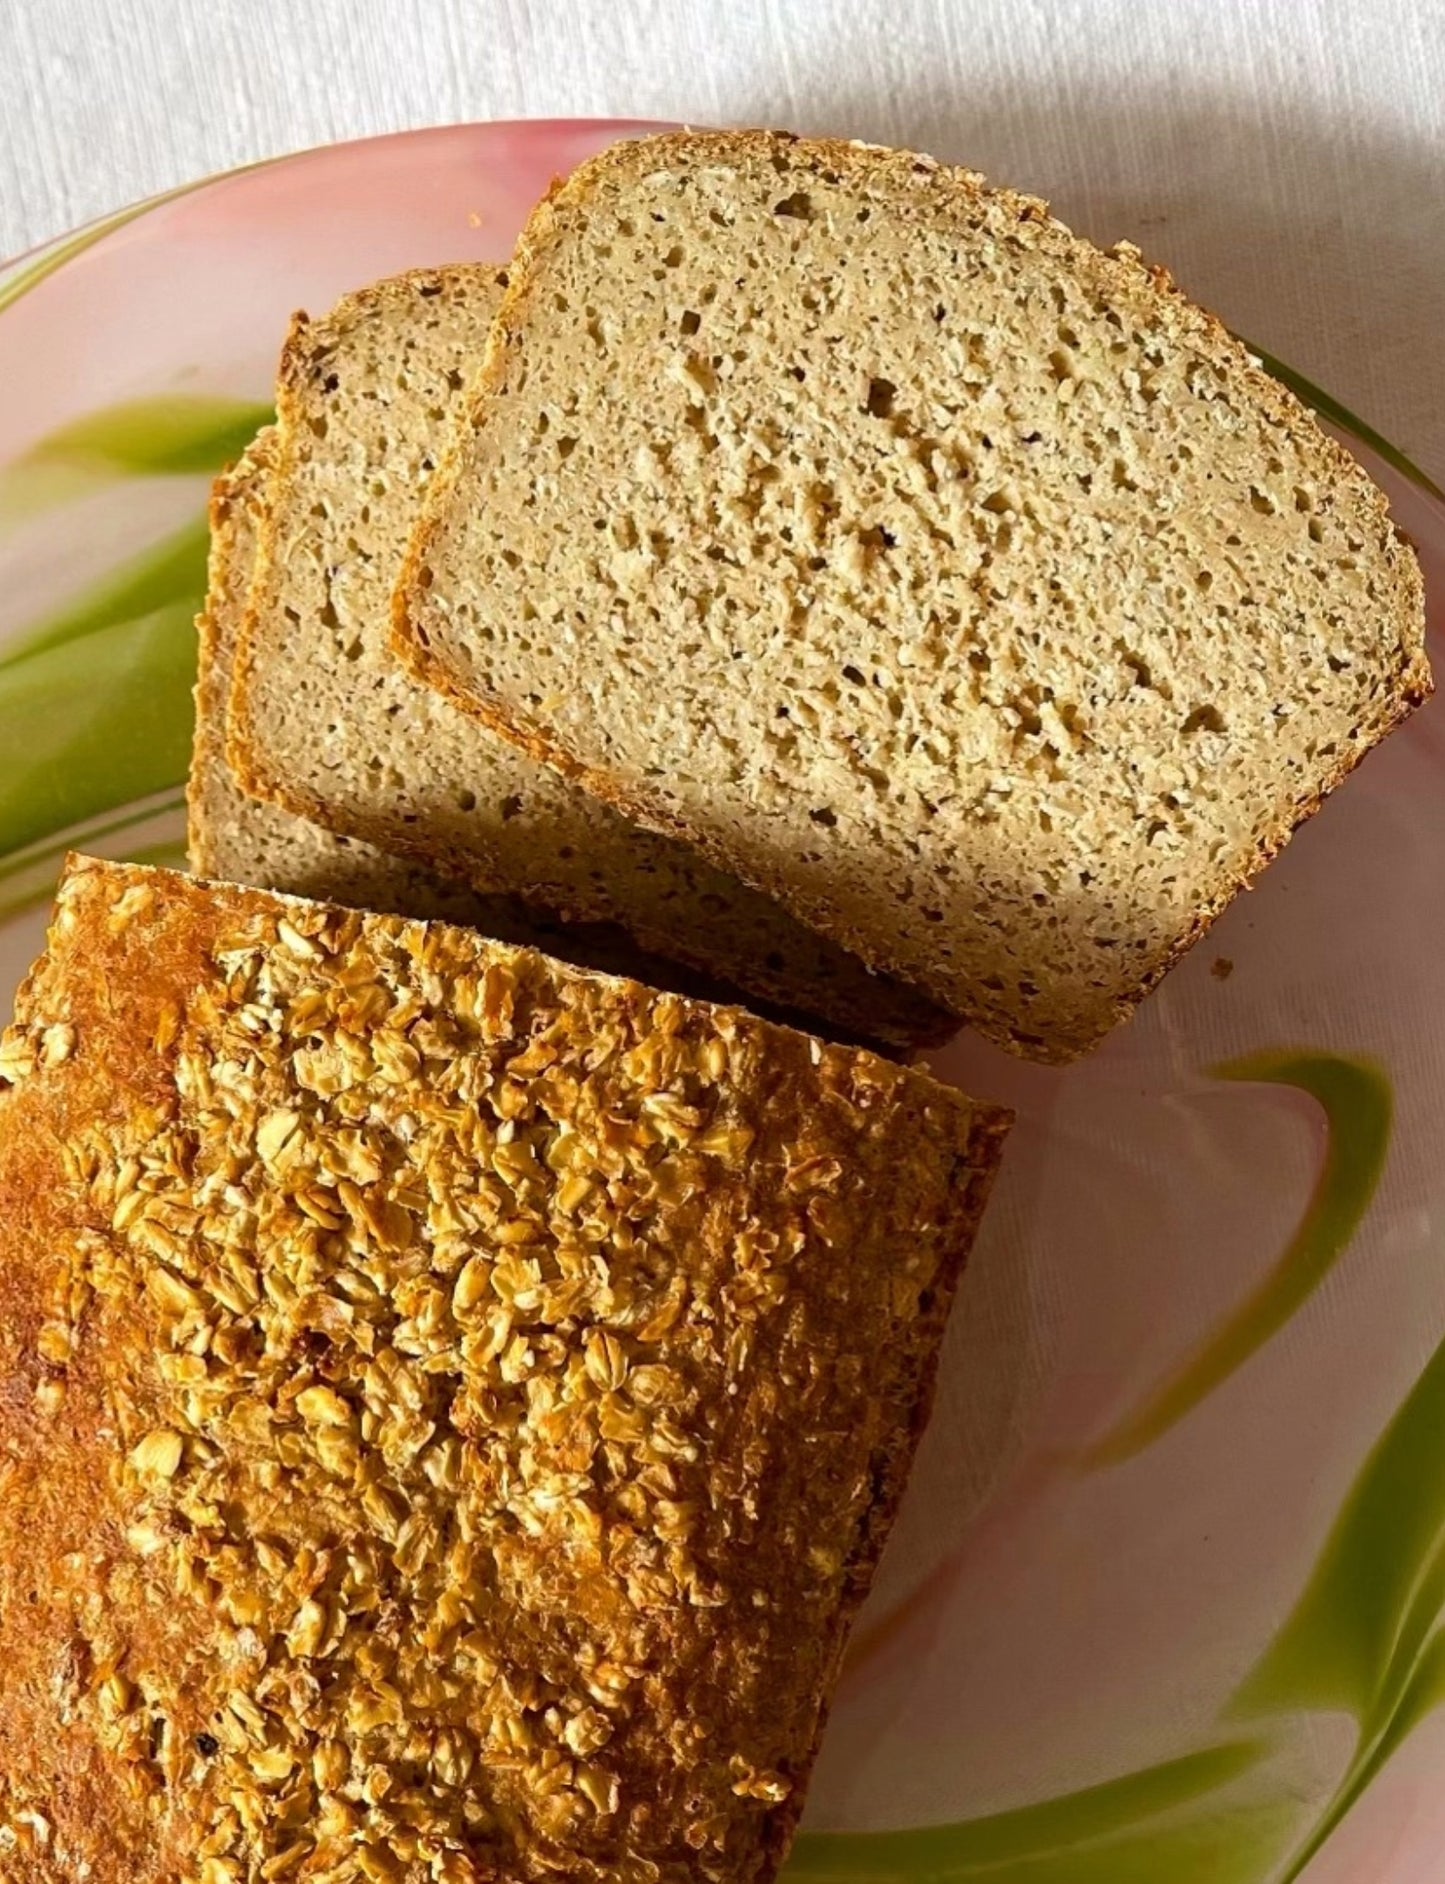 Gluten-free bread - Ankarsrum United States